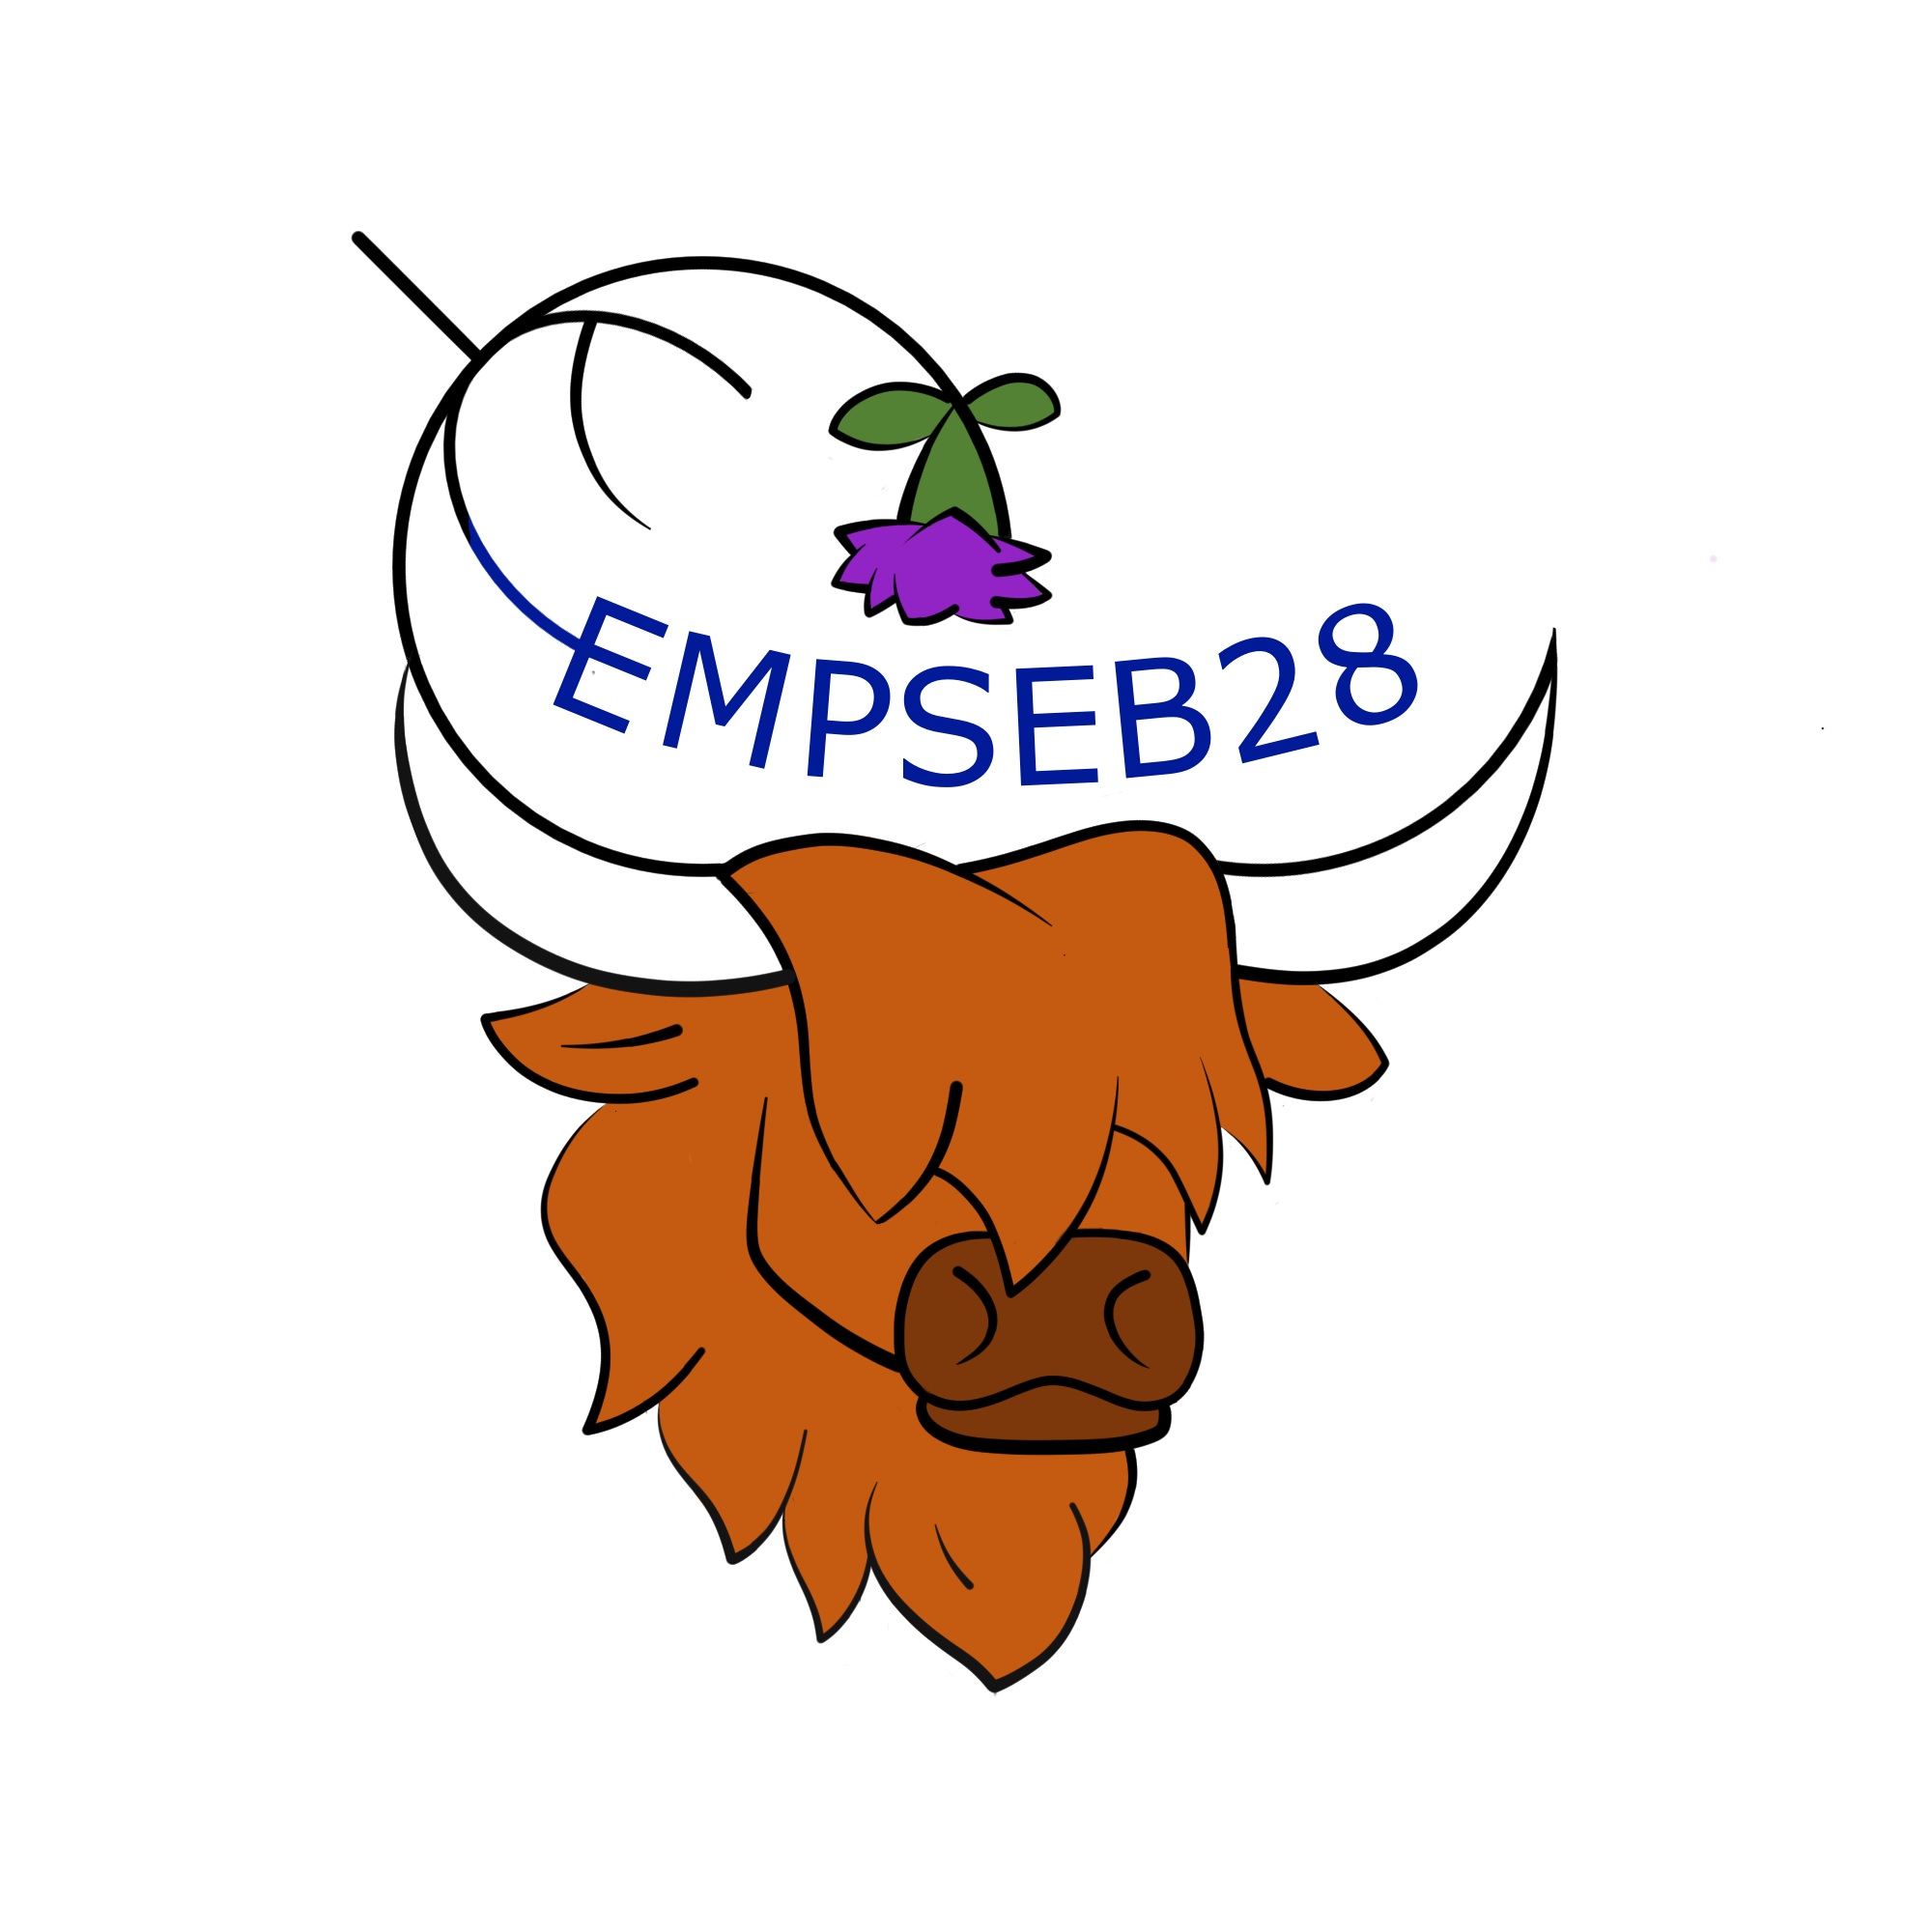 EMPSEB28 Logo